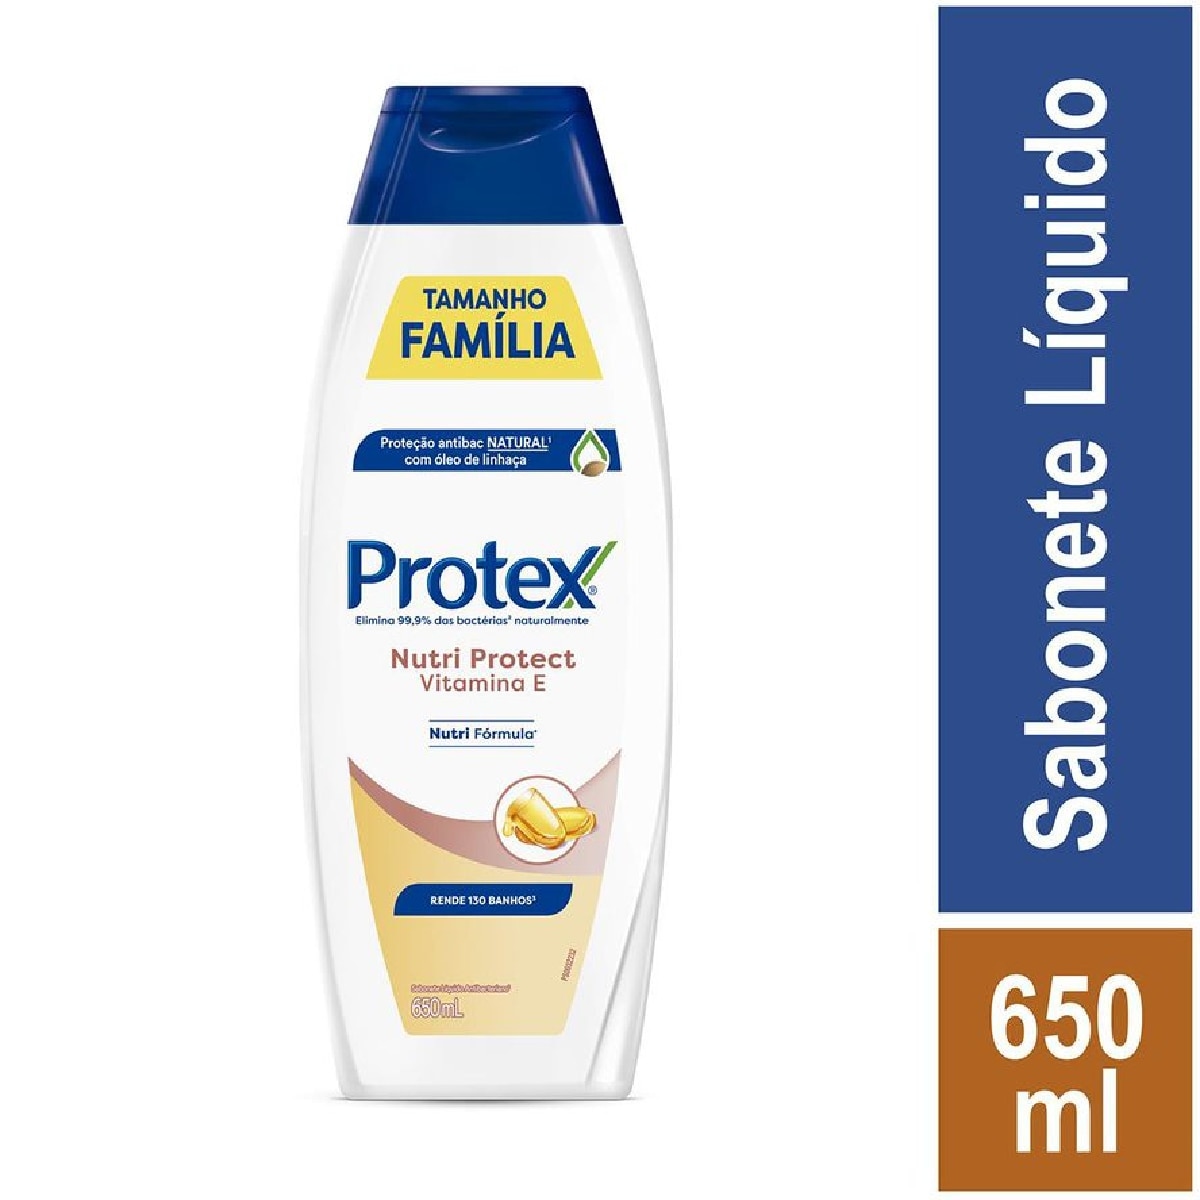 Sabonete Liquido Protex Nutri Protect Vitamina E 650ml